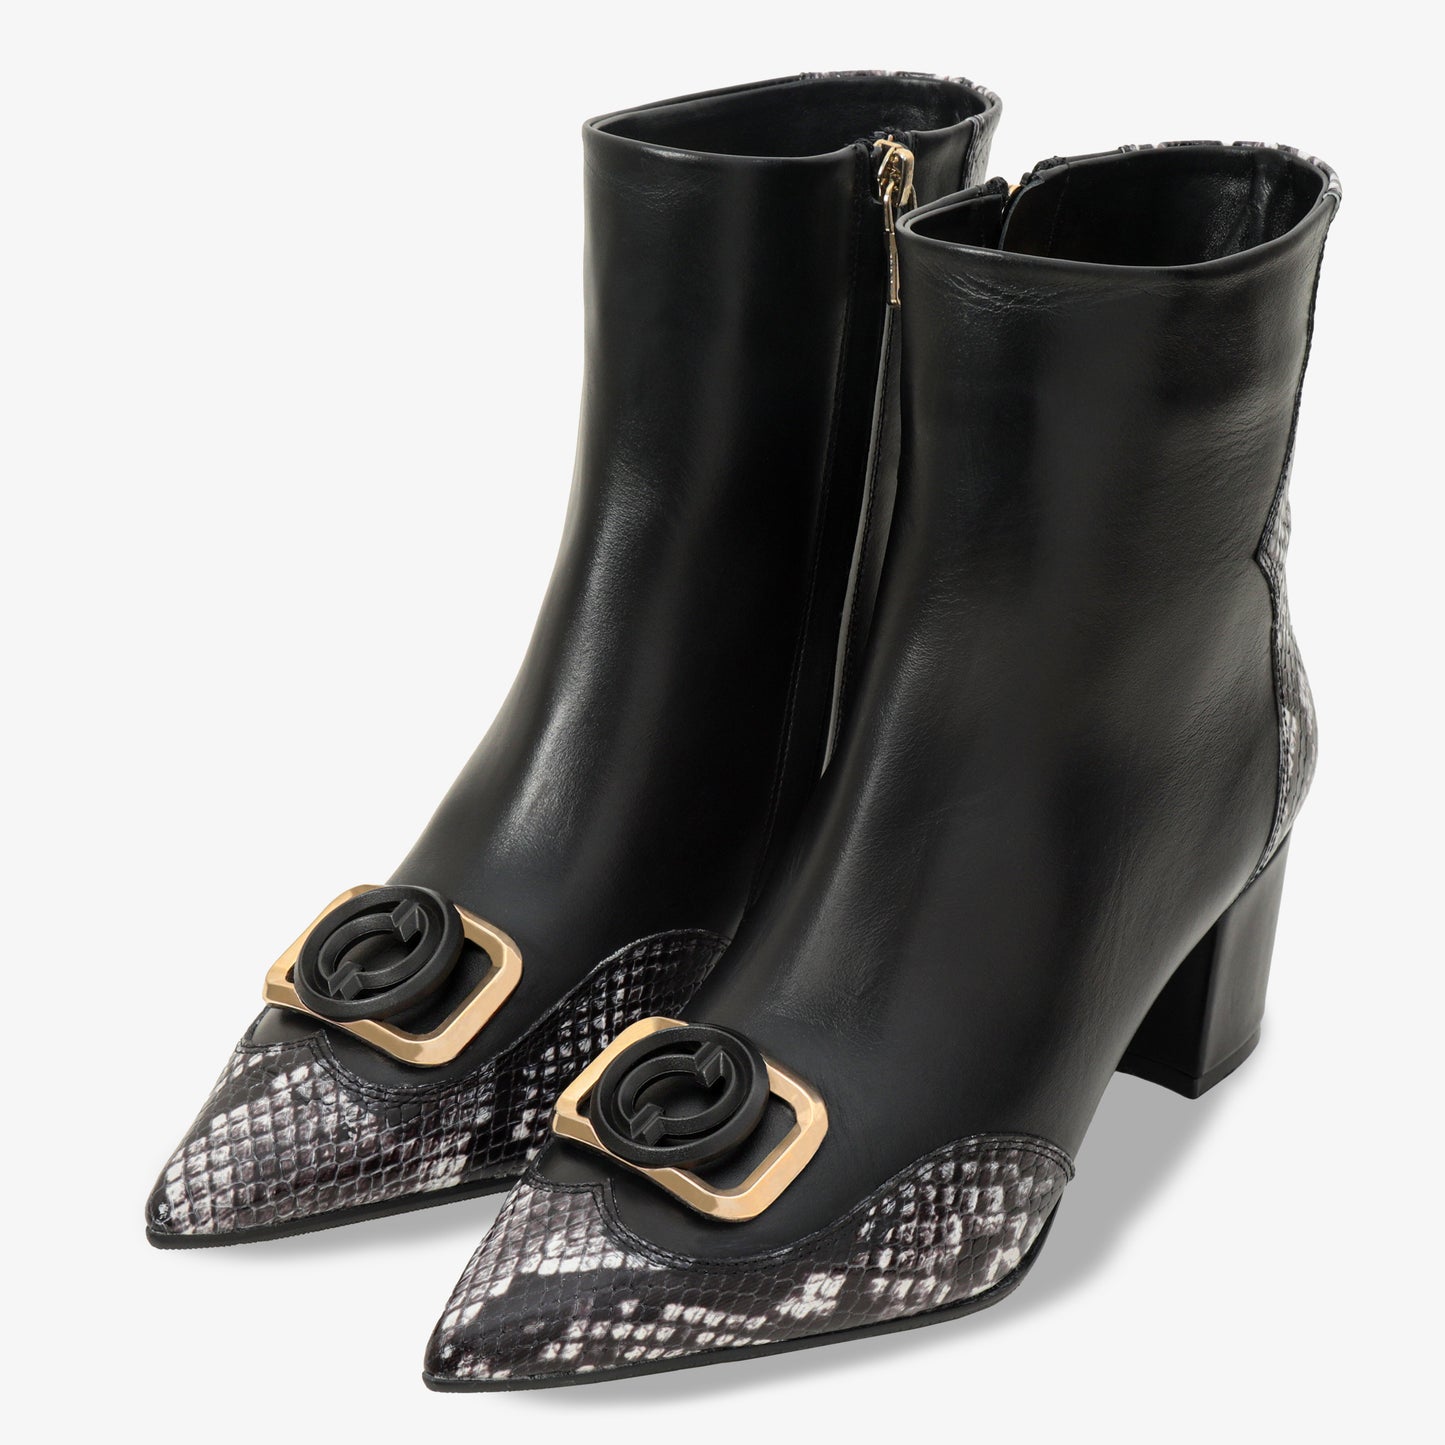 The Gray Black & White Leather Block Heel Women Boot